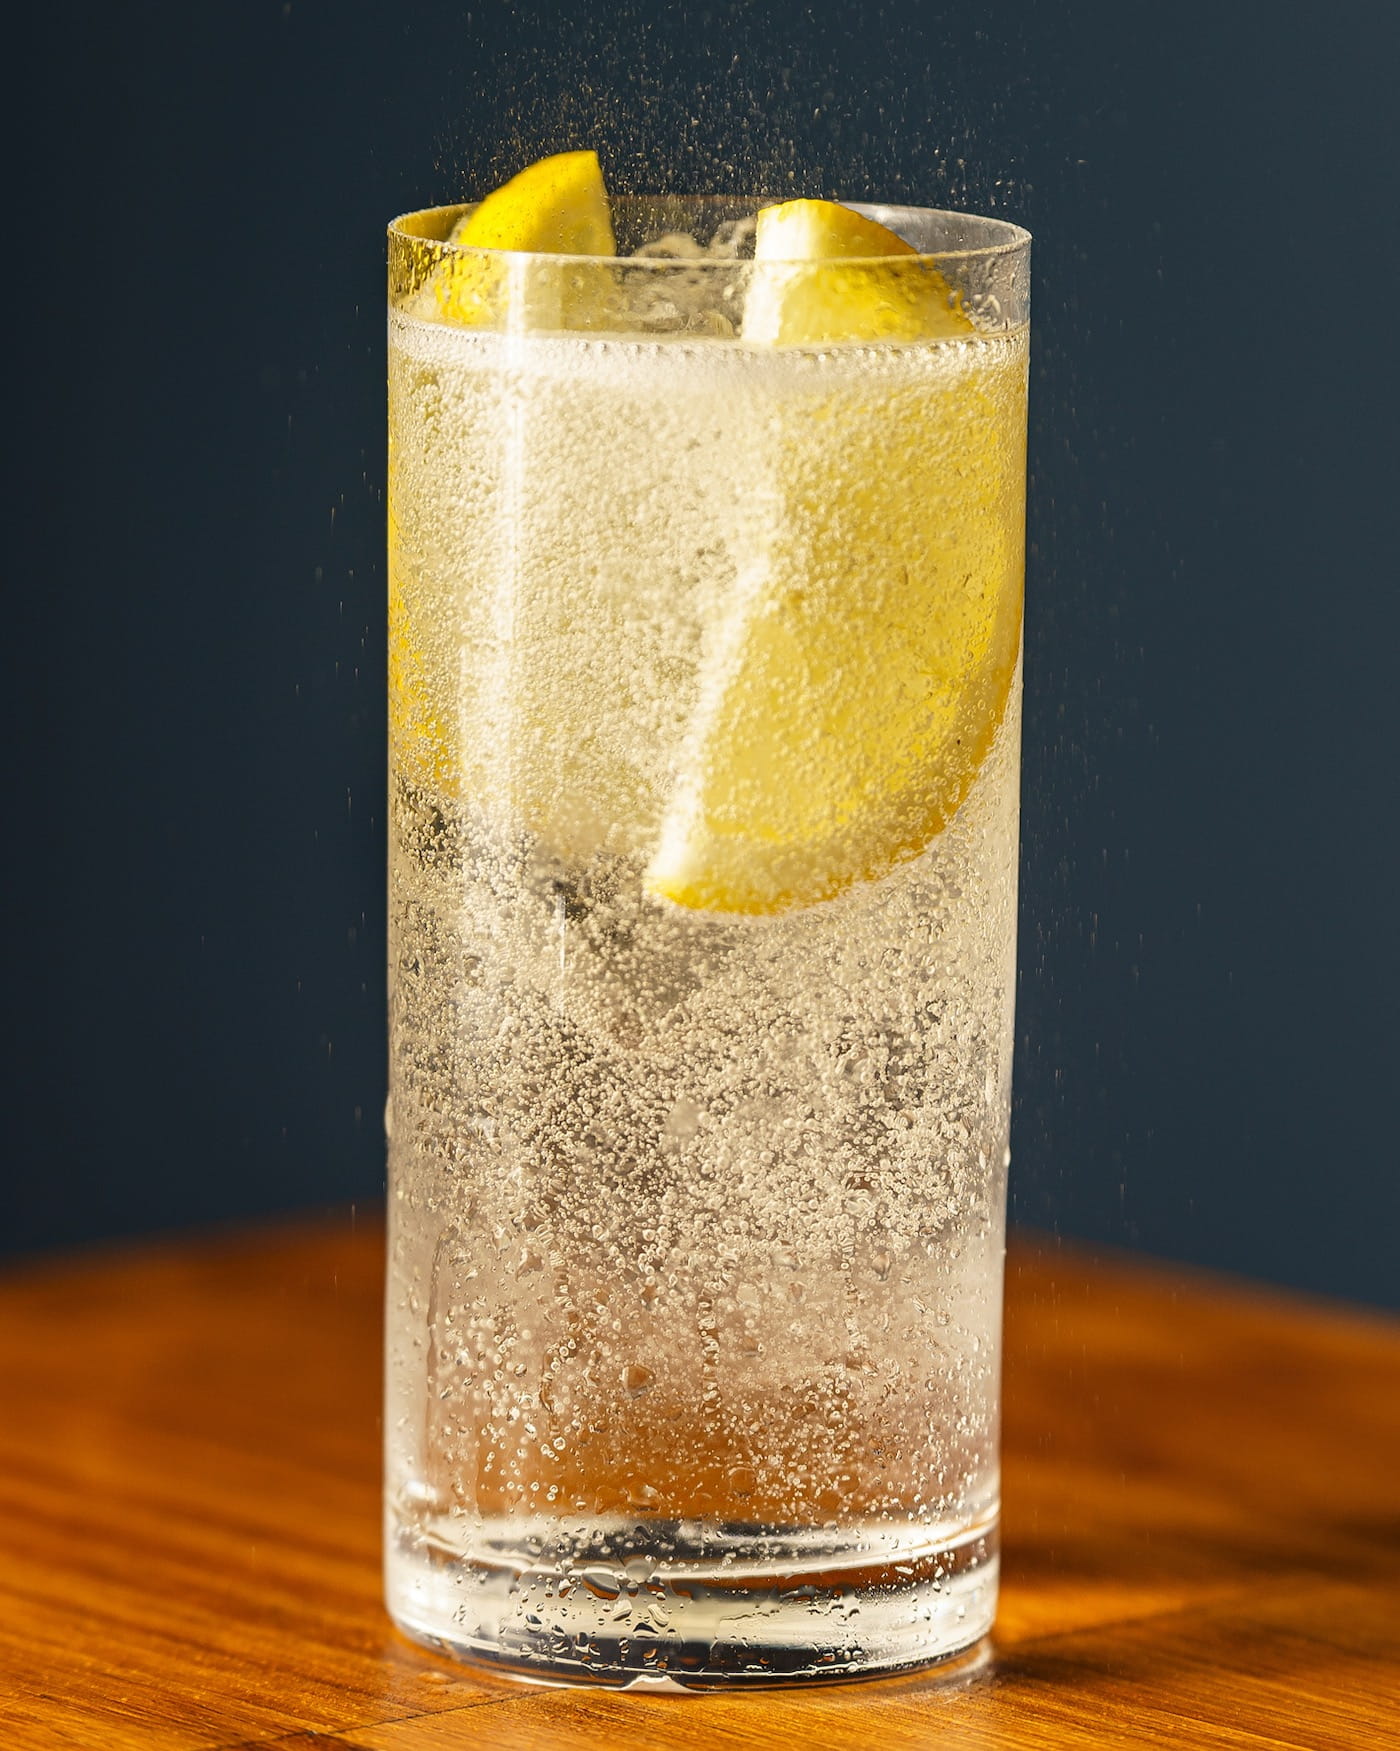 cocktail gin fizz